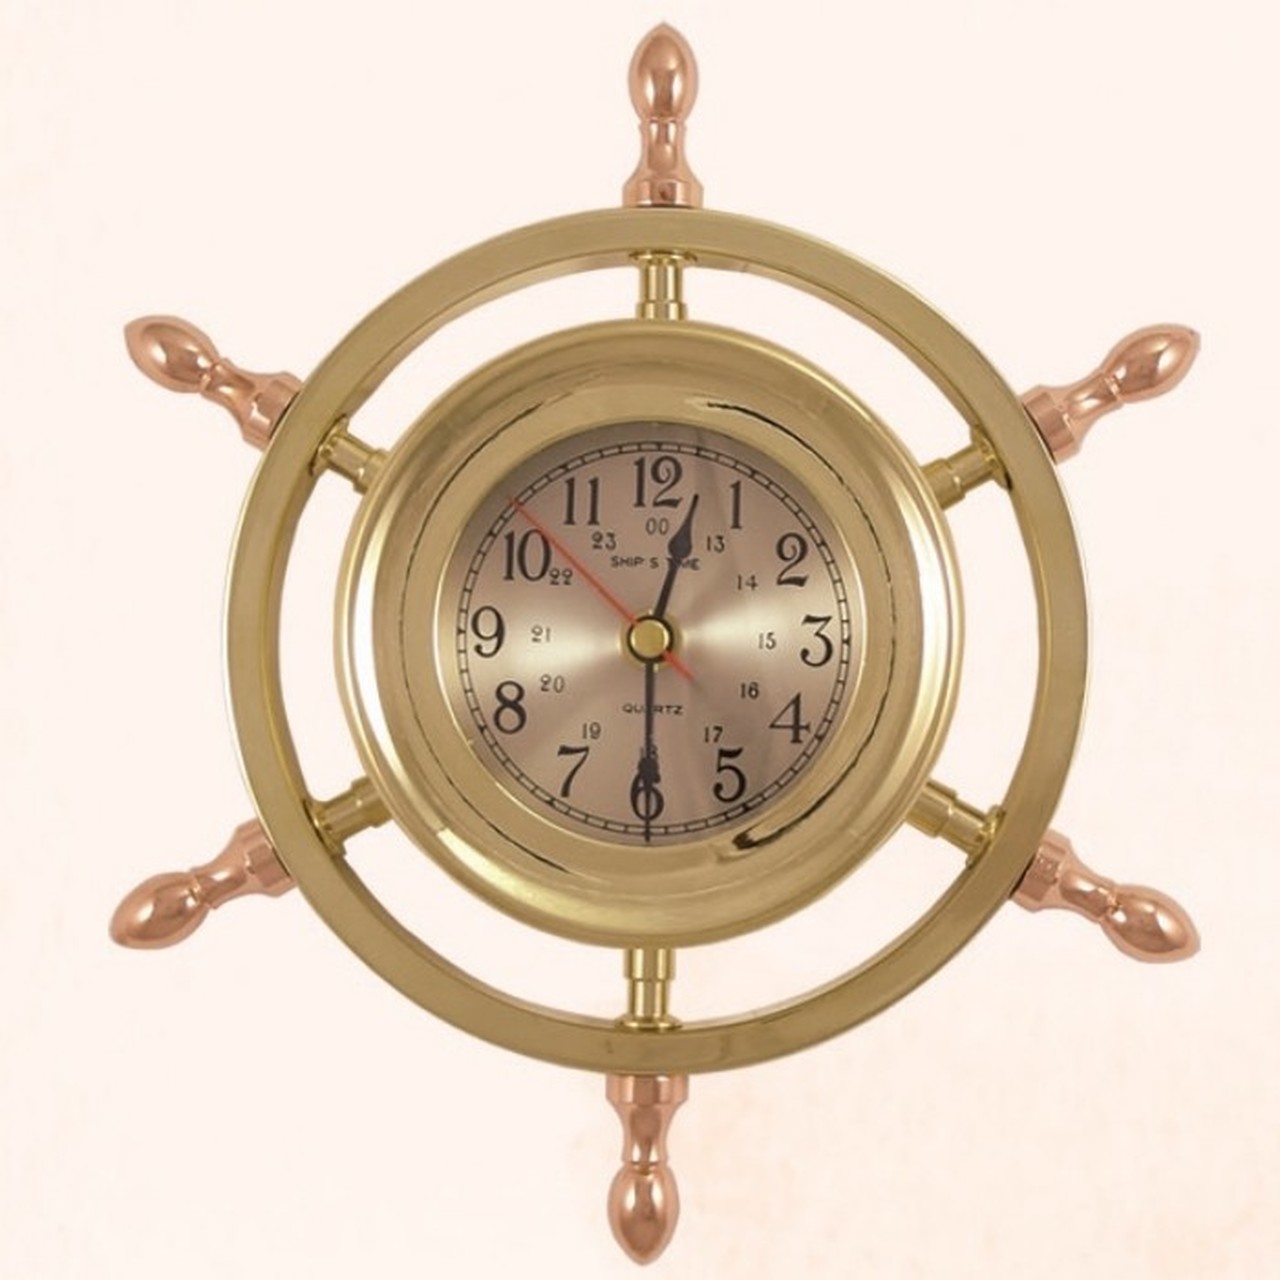 Brass Ship Wheel Captain Clock with Copper Spokes - 9